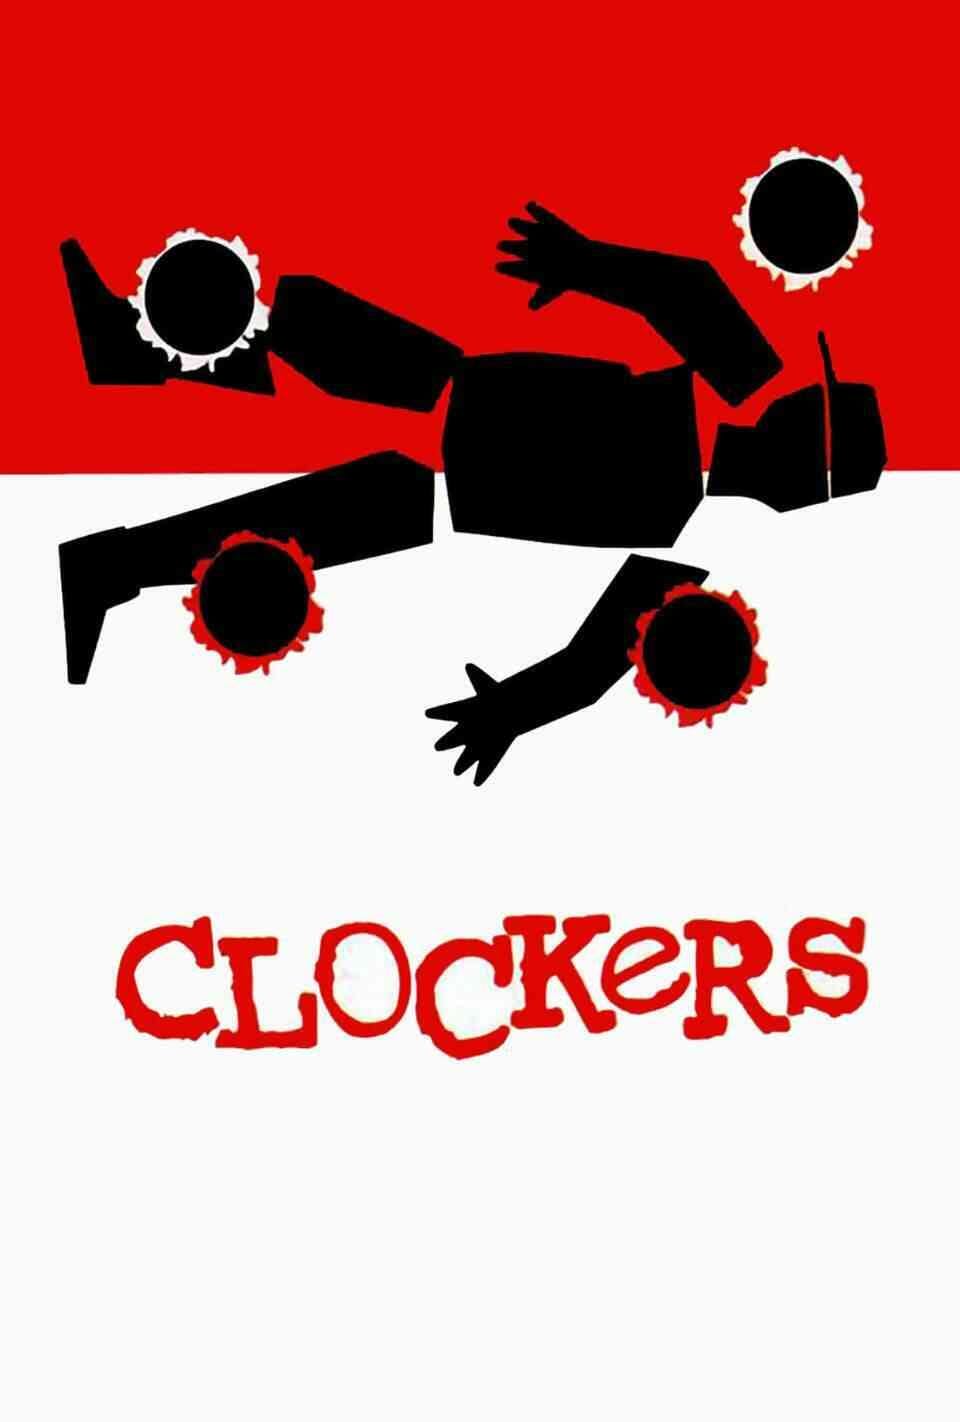 Read Clockers screenplay (poster)